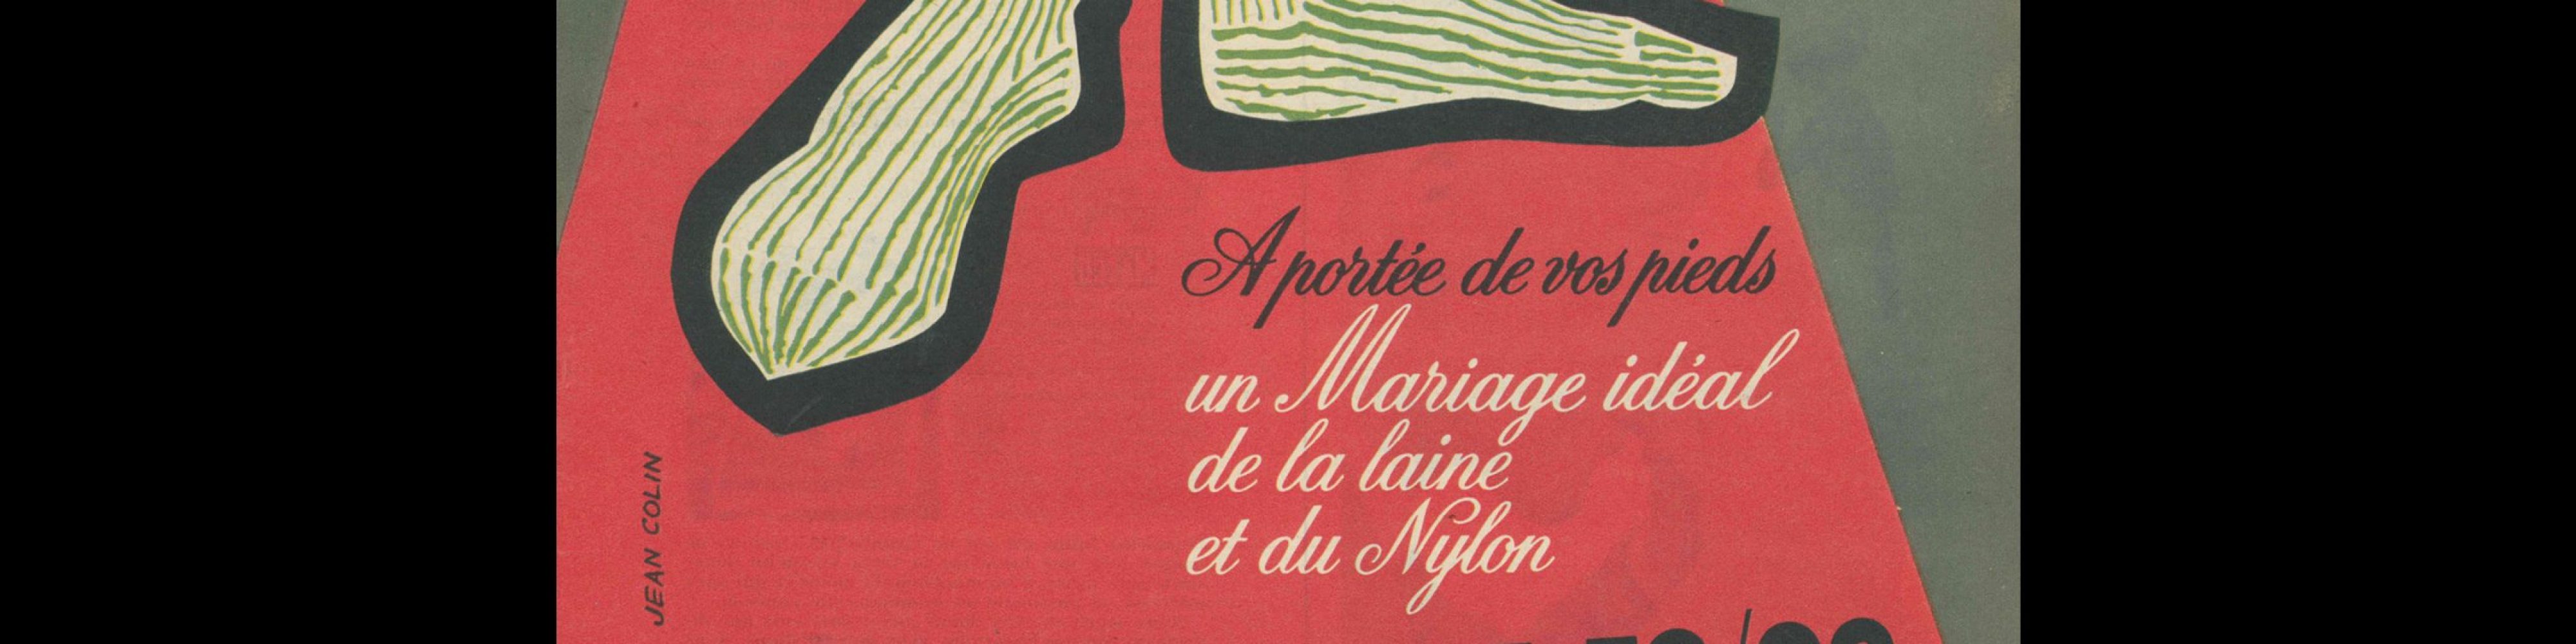 La Chaussettes 70/30, Advertisement, 1957. Designed by Jean Colin.